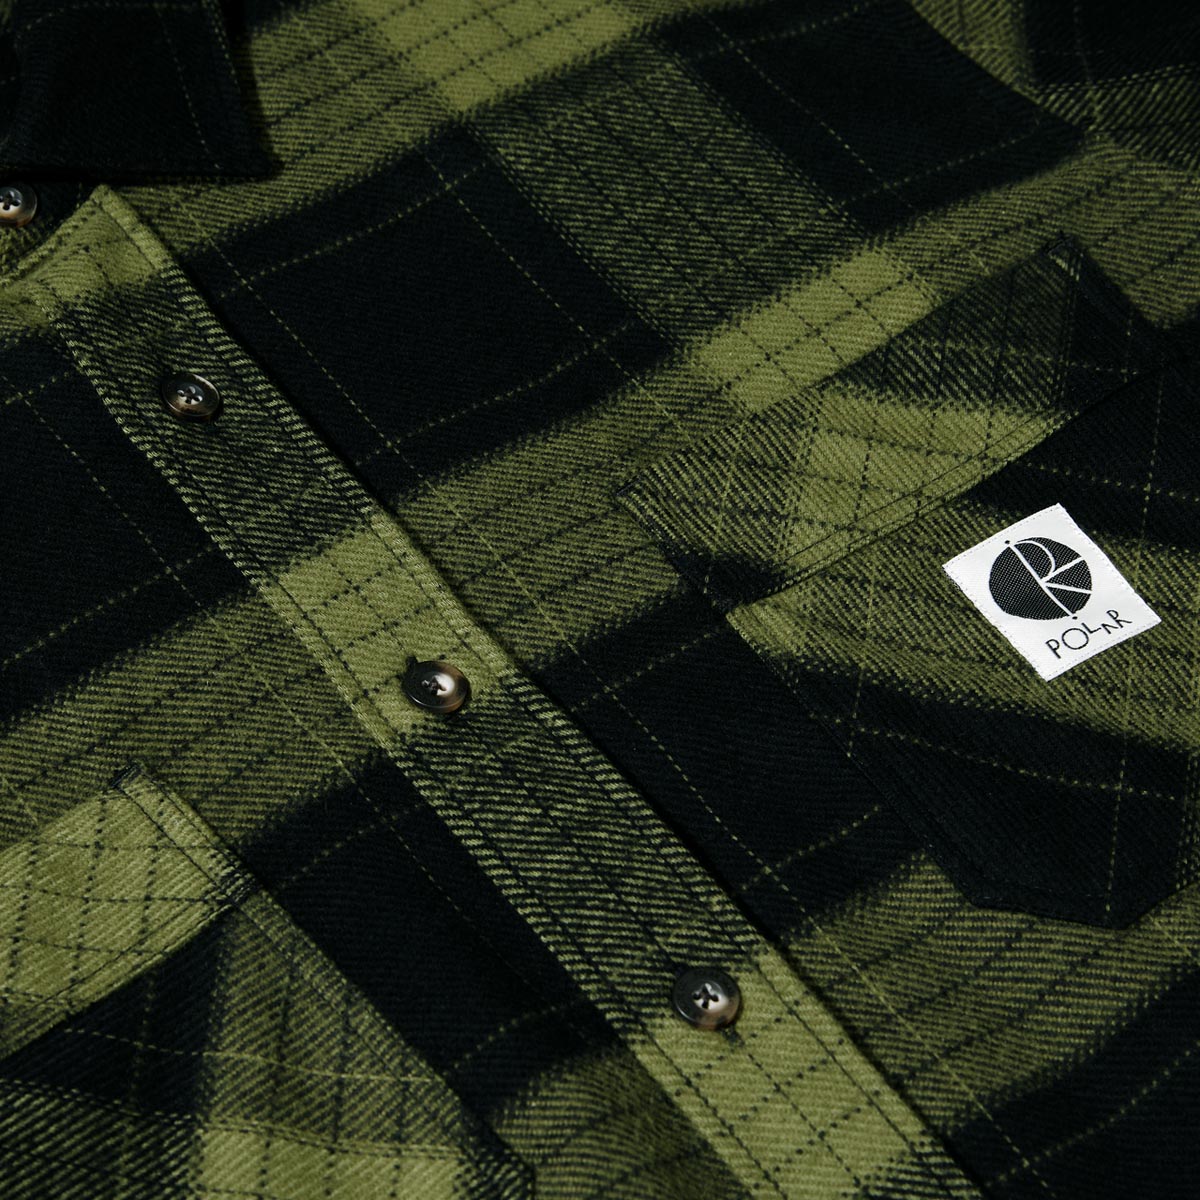 Polar Mike Flannel Long Sleeve Shirt - Black/Army Green image 2